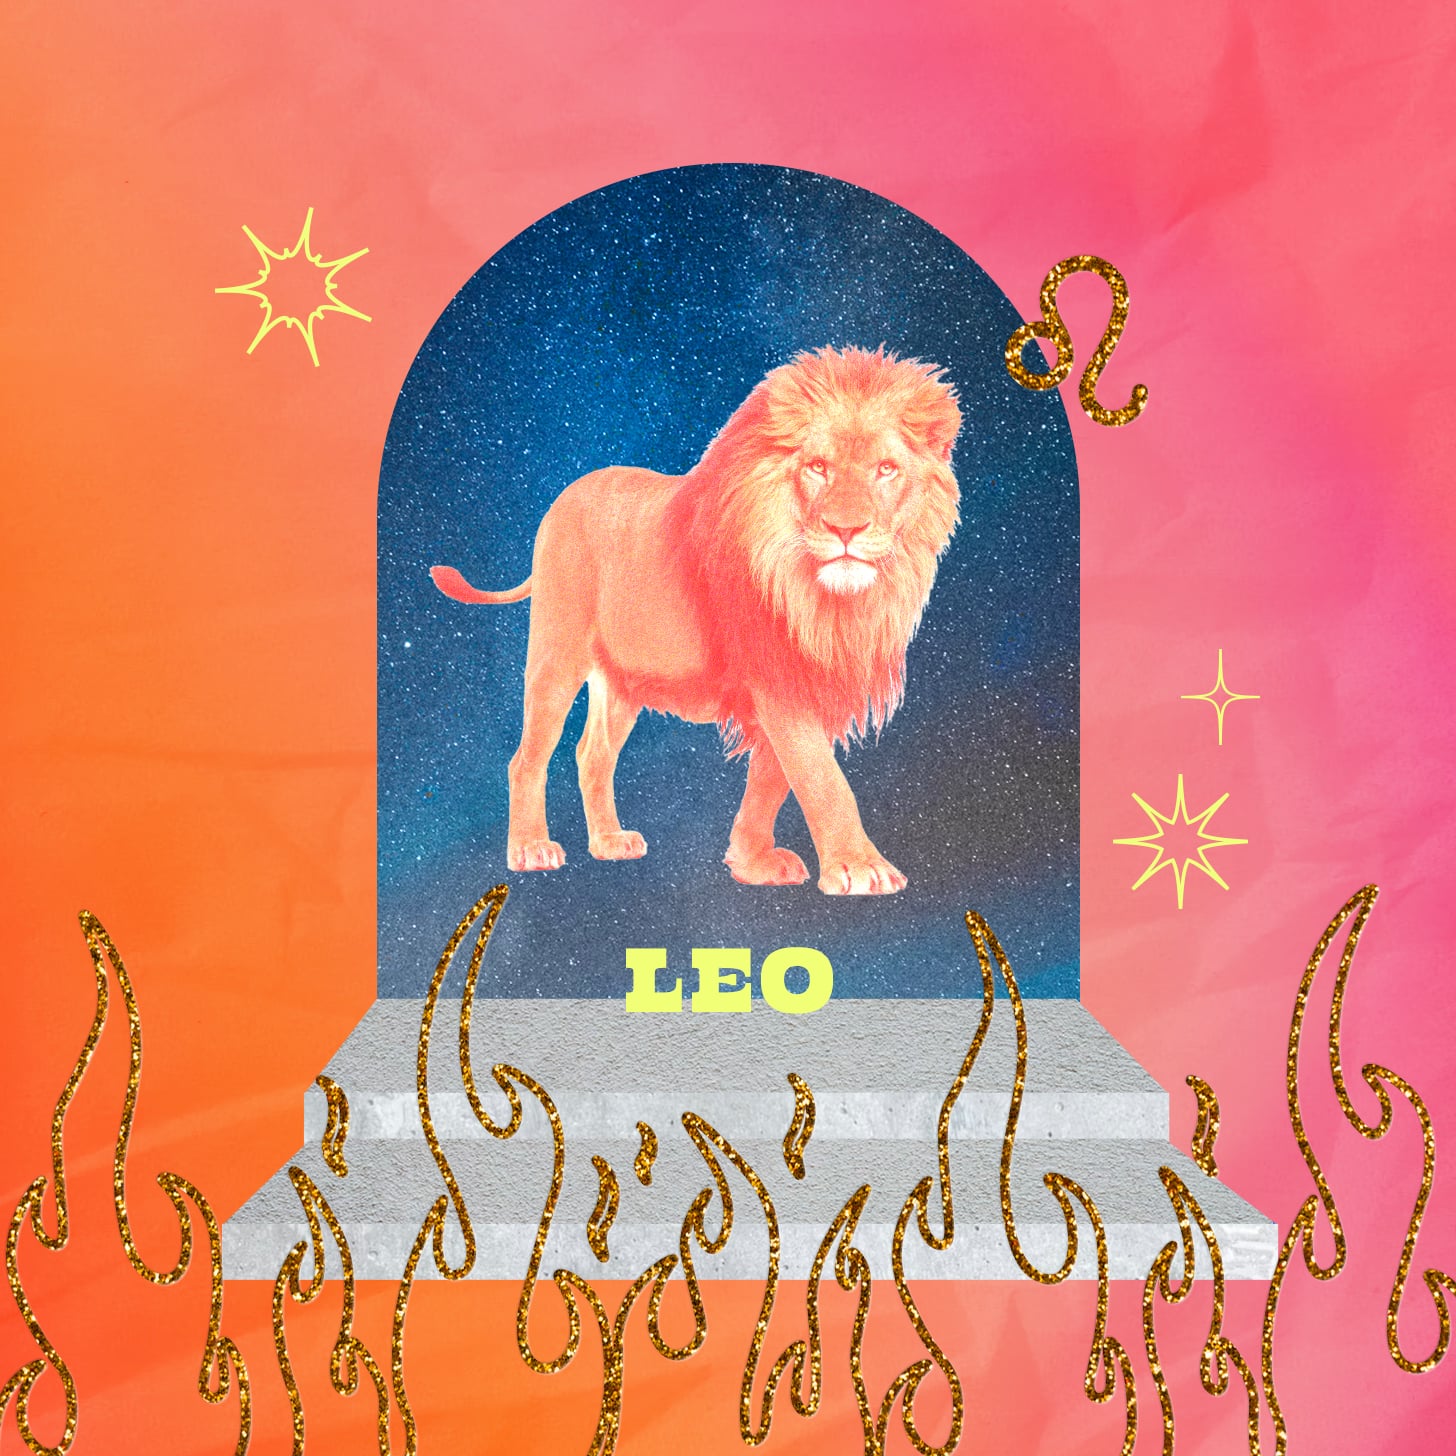 Leo weekly horoscope for November 6, 2022